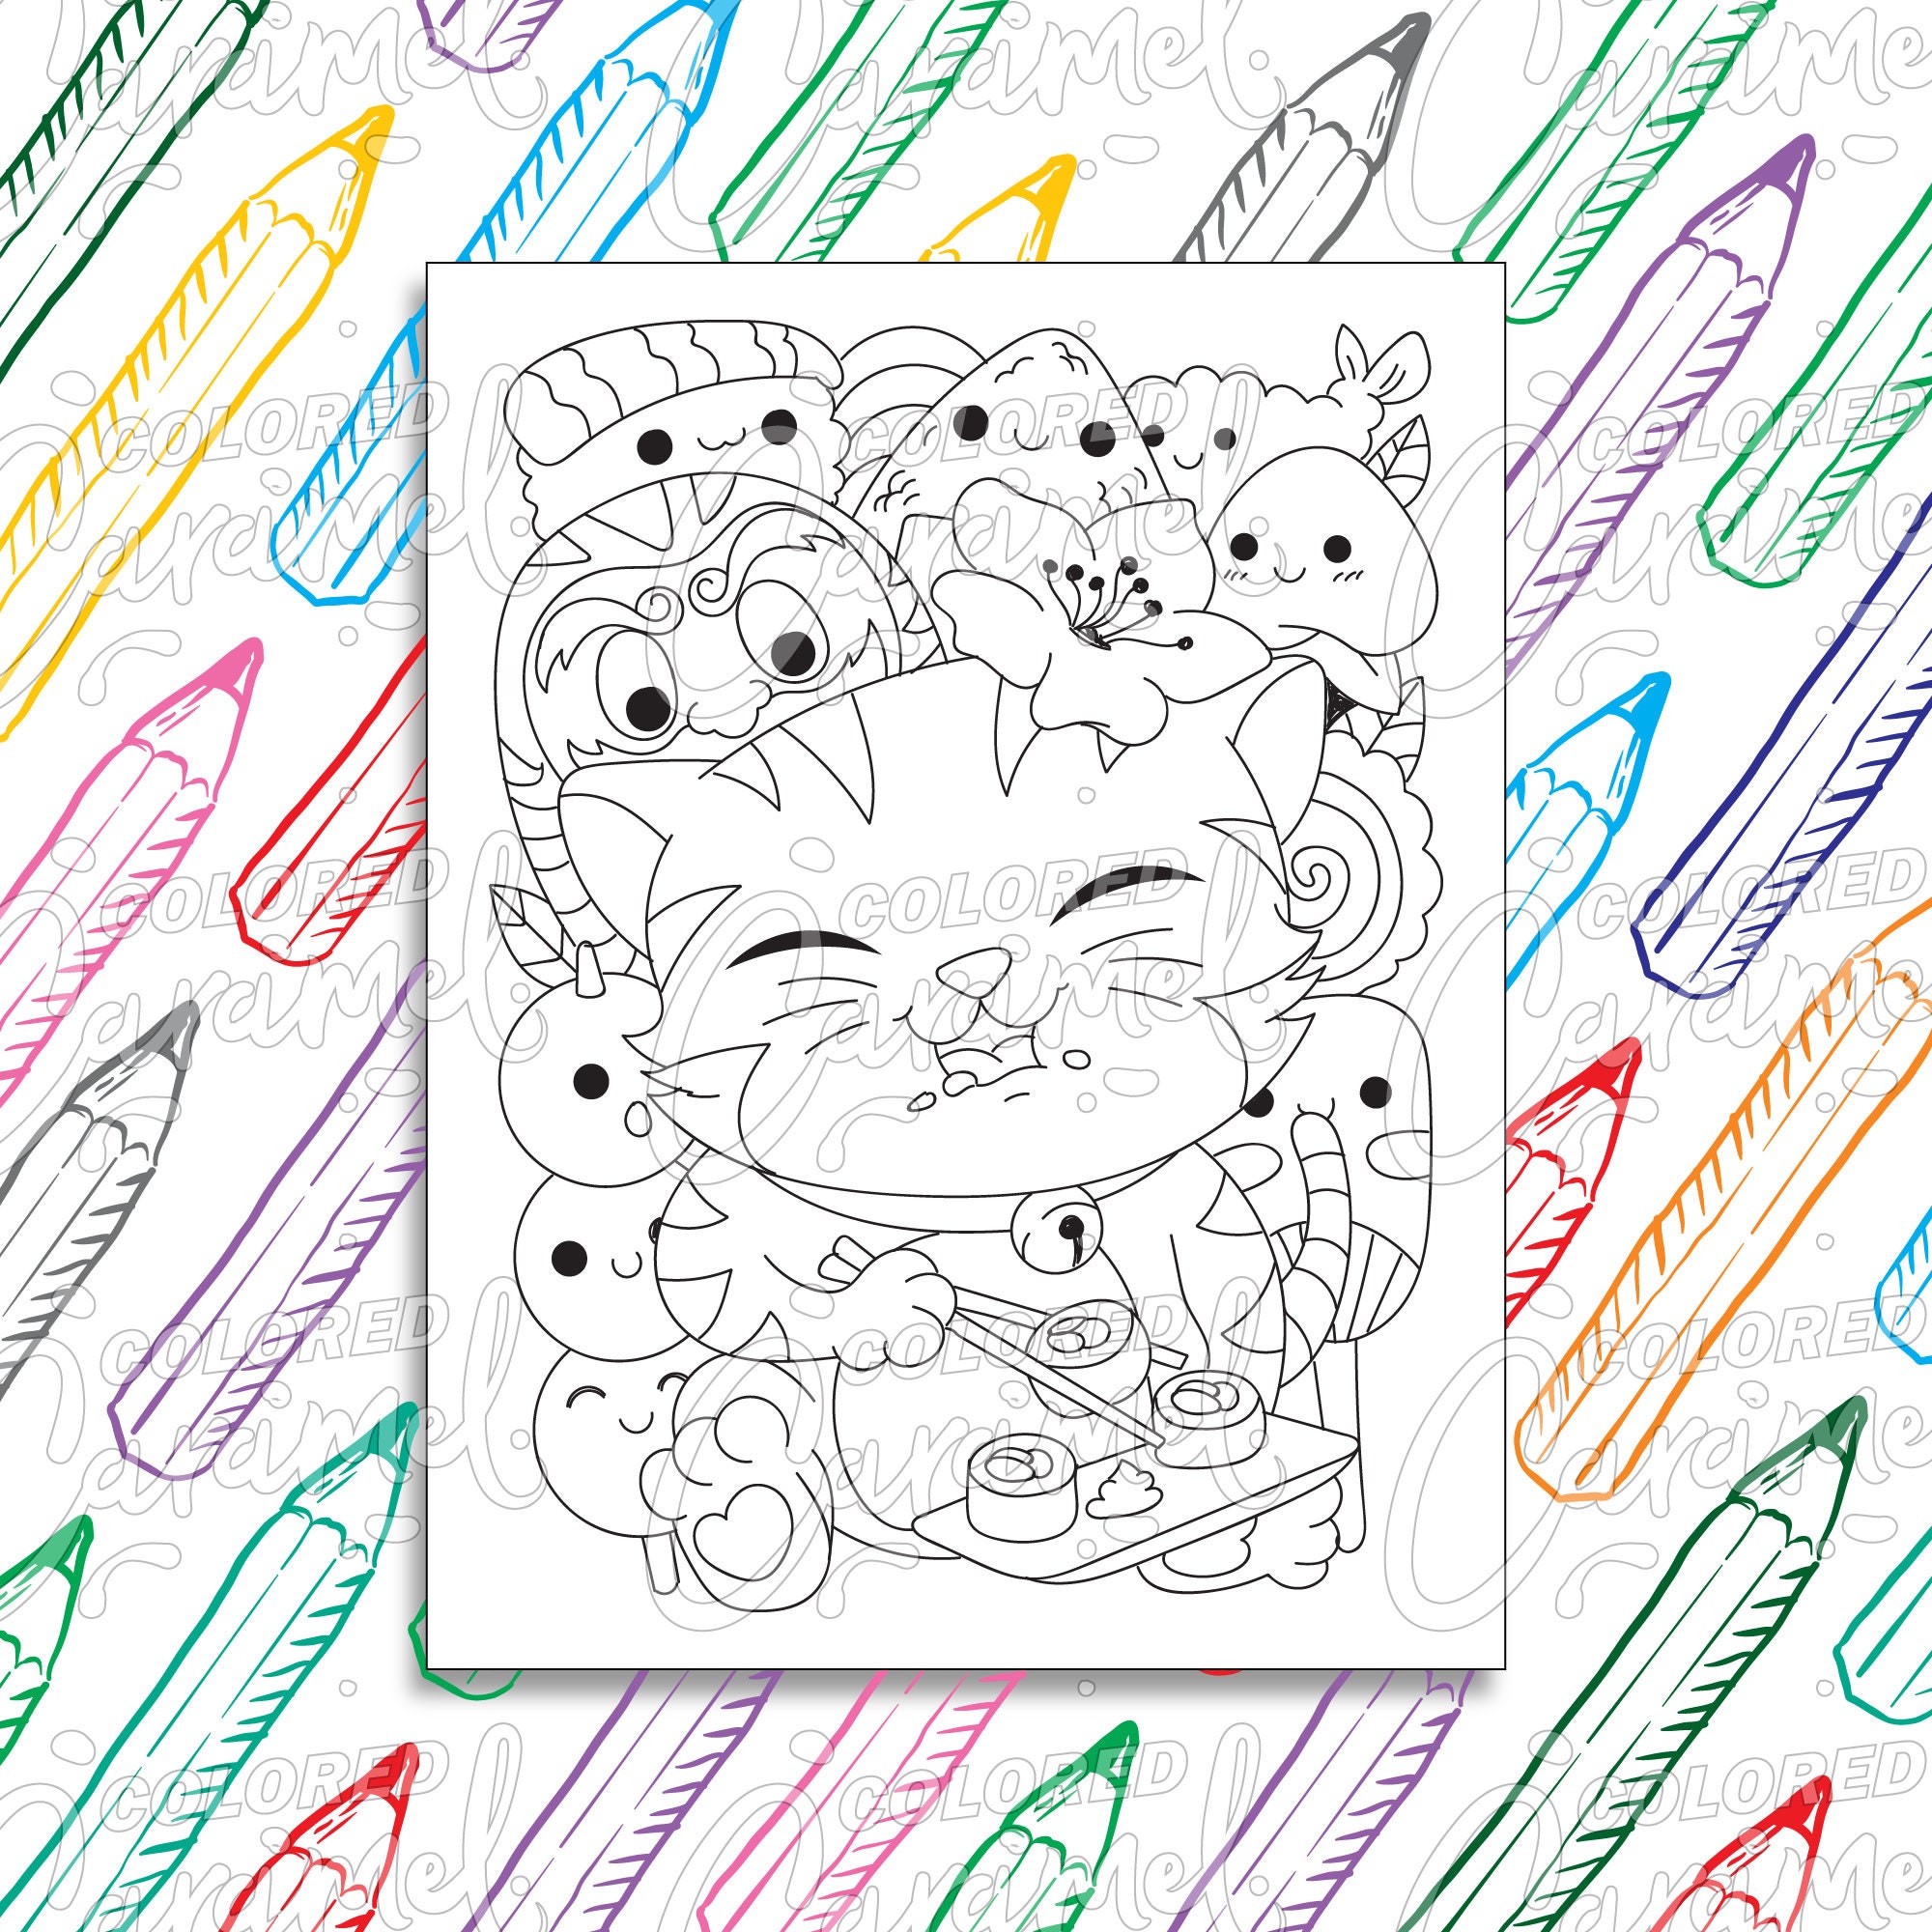 Kawaii Coloring Page Digital Download PDF with Japanese Maneki Neko Lucky Cat Eating Sushi Beautiful Drawing & Illustration Doodle